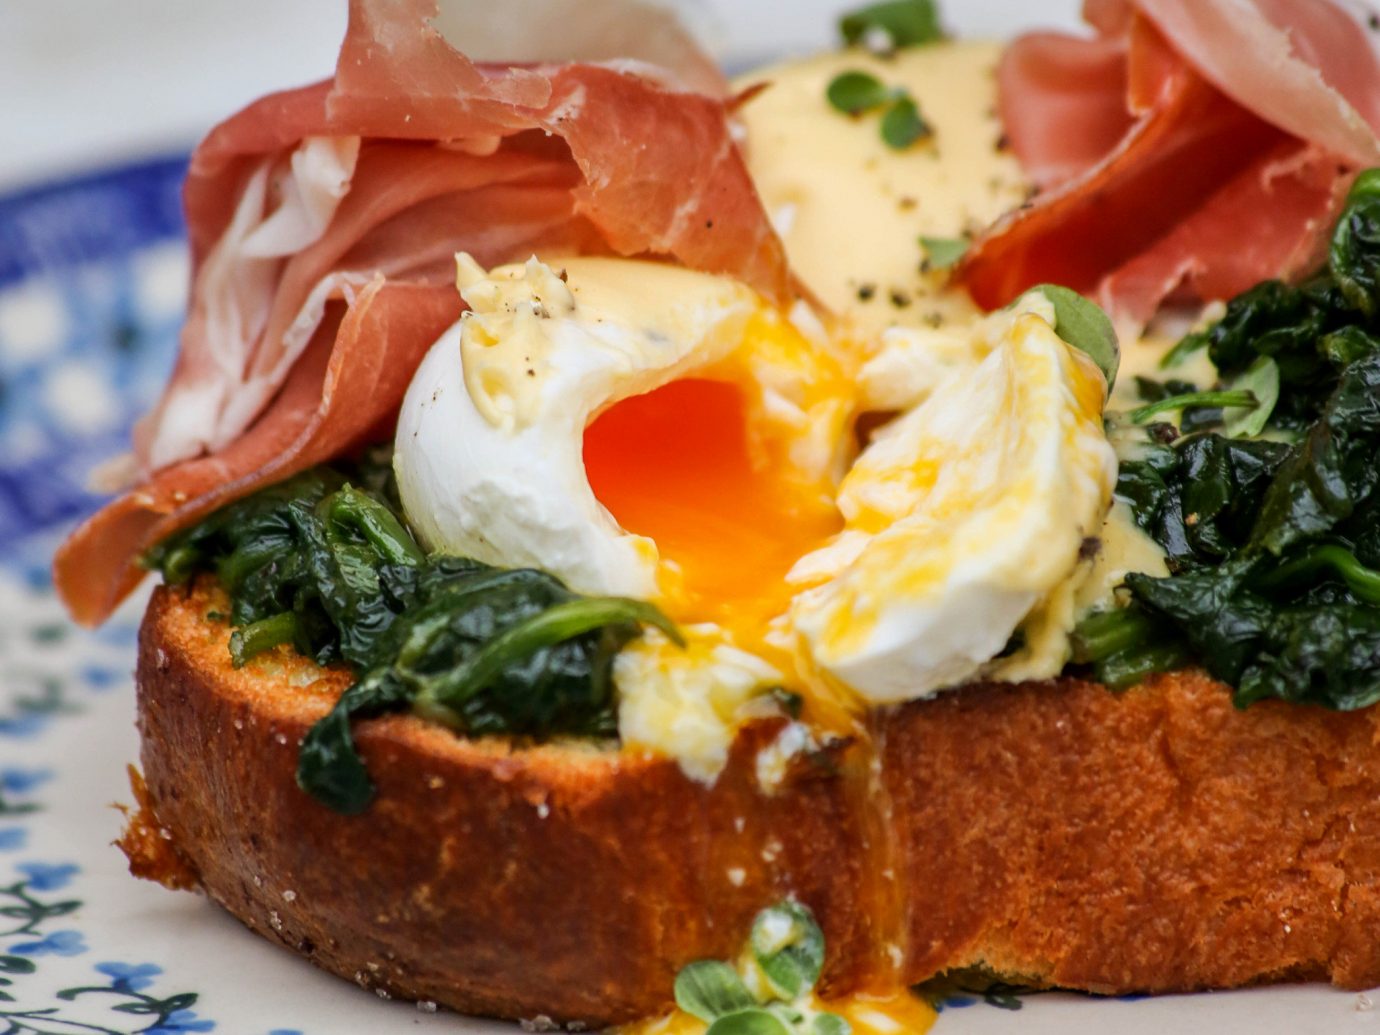 10 Best Restaurants in Paris